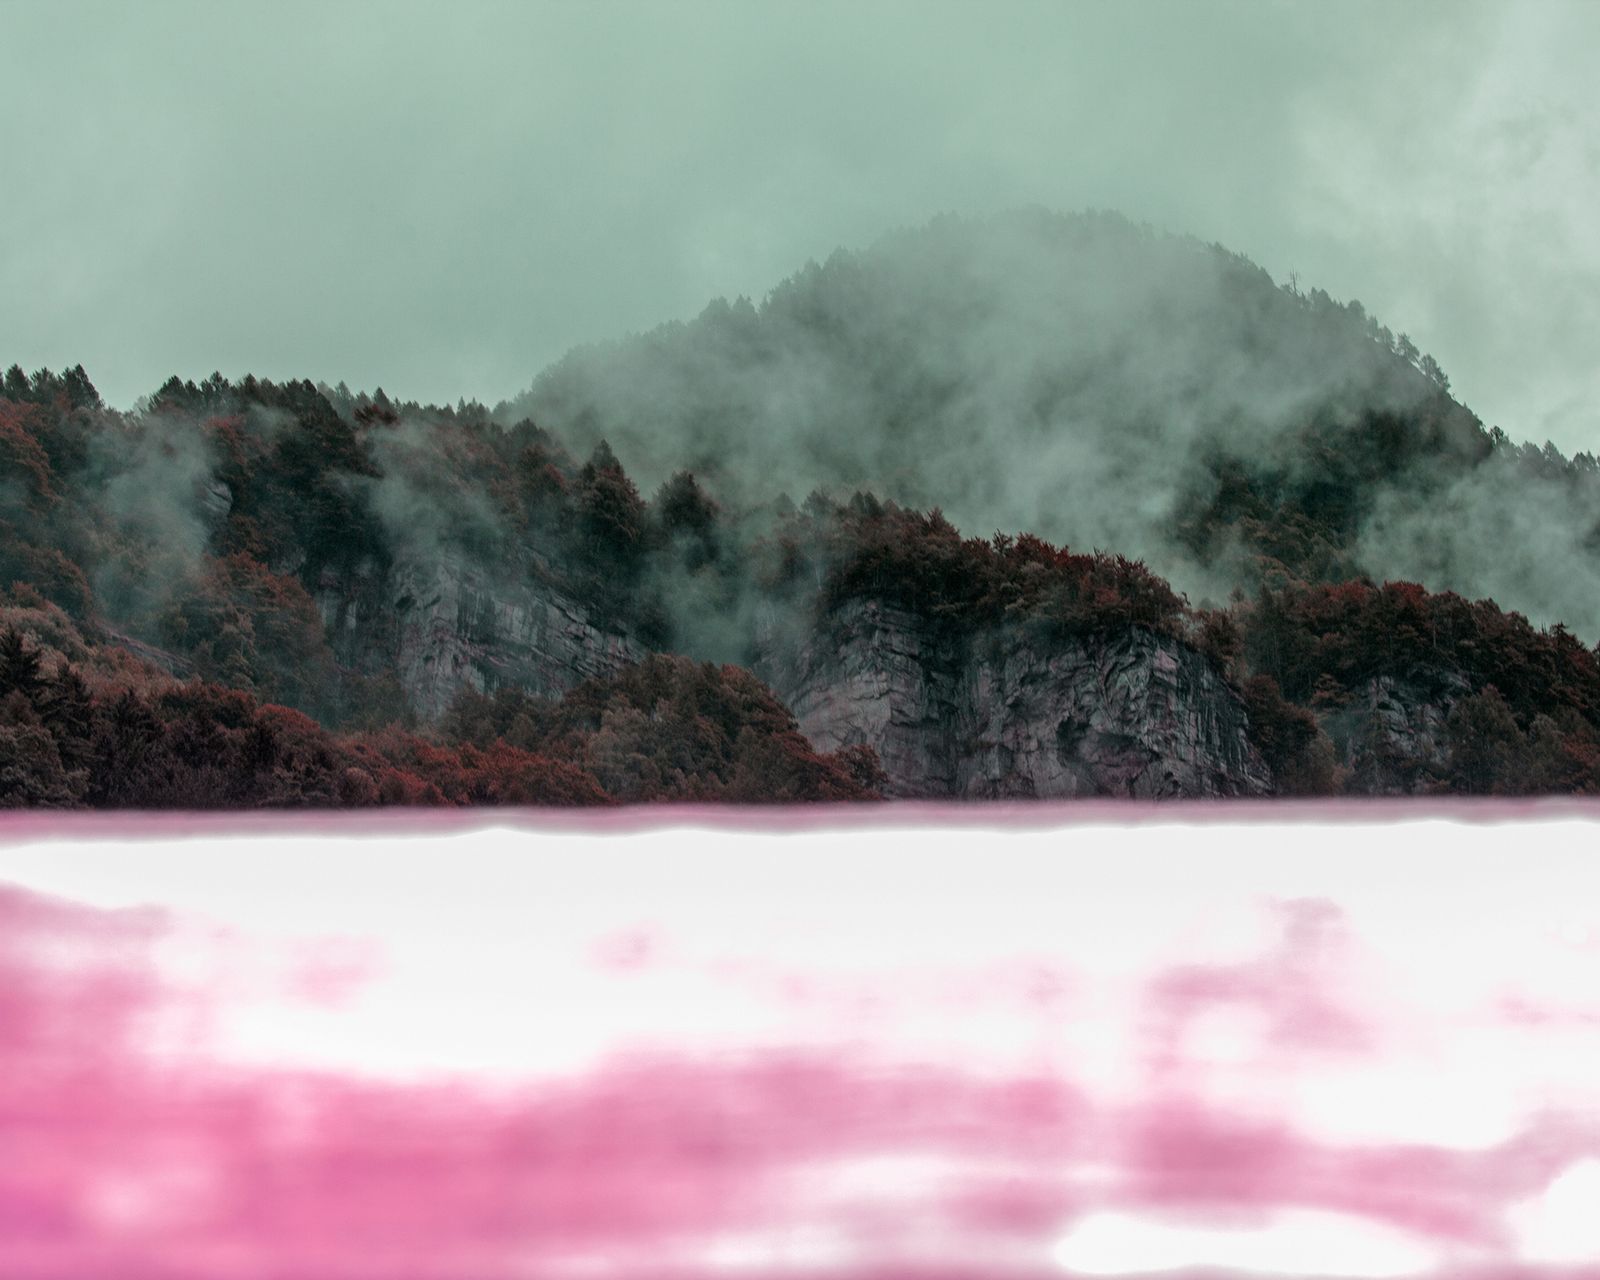 © Camila Rodrigo - Pink river: Medium format photograph, done with expired film.